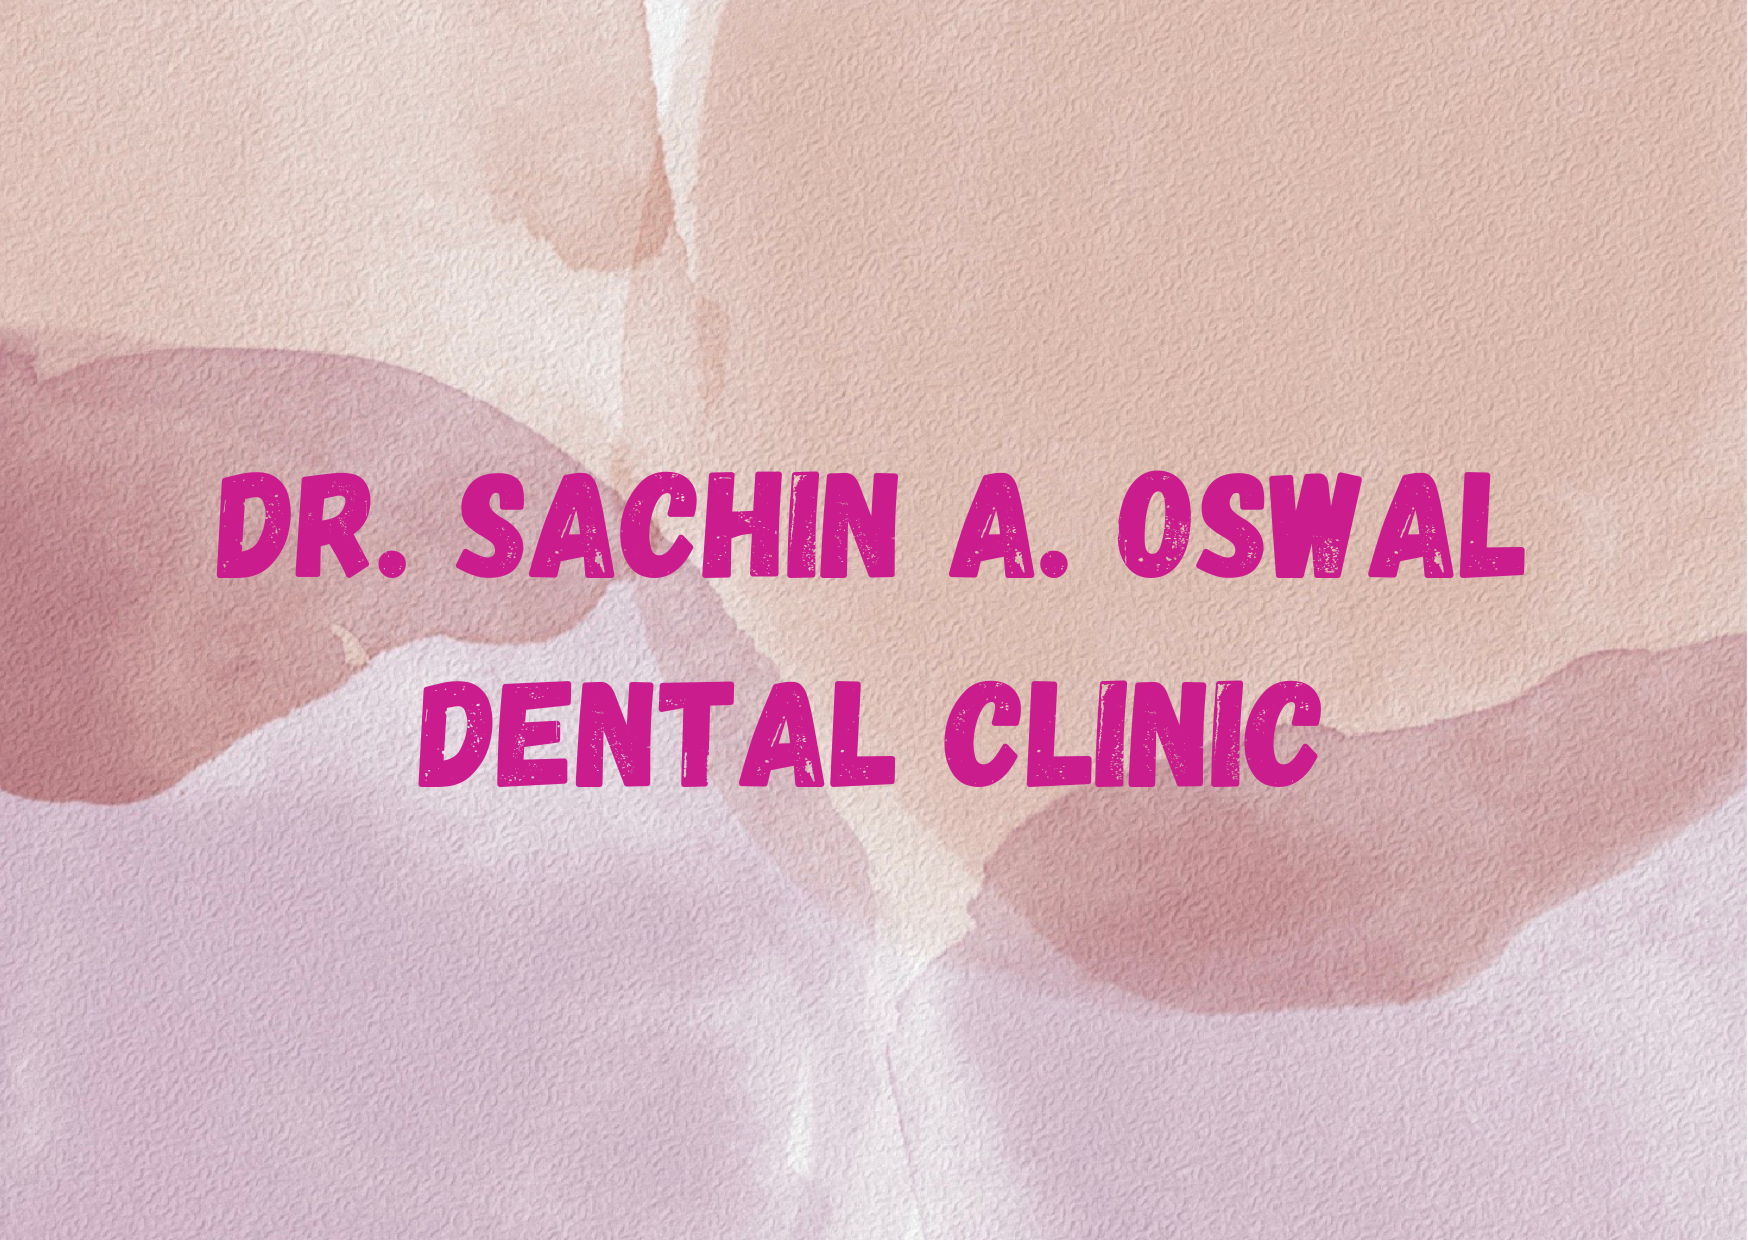 Dr. Sachin A. Oswal Dental Clinic,   